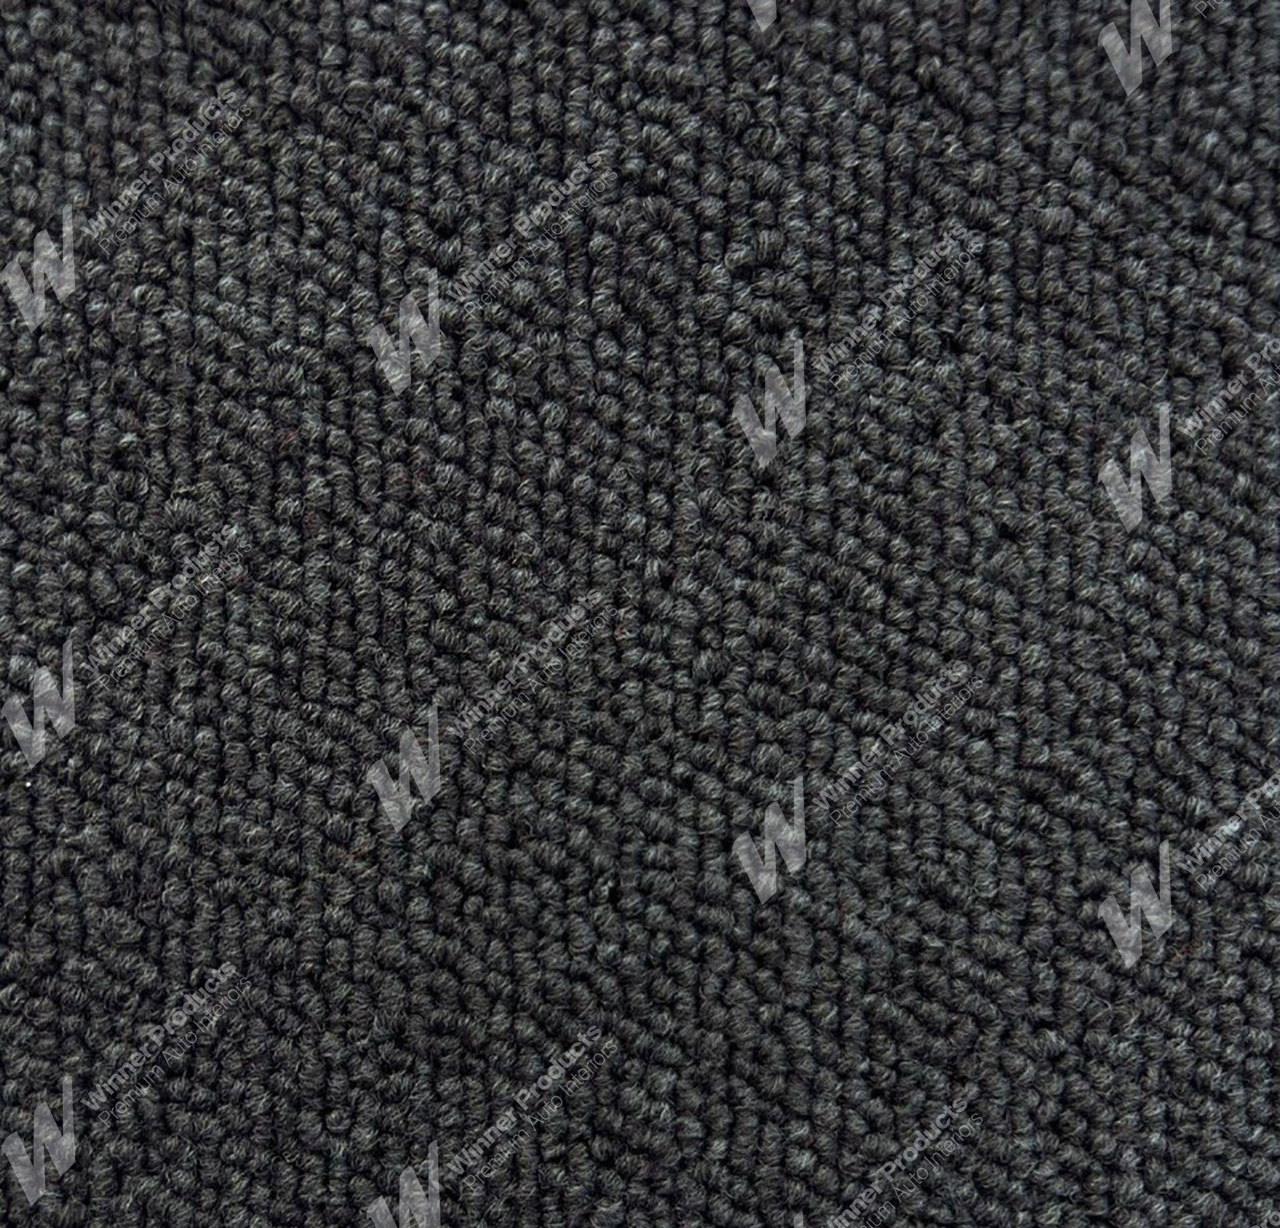 Holden Kingswood HJ Kingswood Ute 14Y Dove Grey & Cloth Carpet (Image 1 of 1)